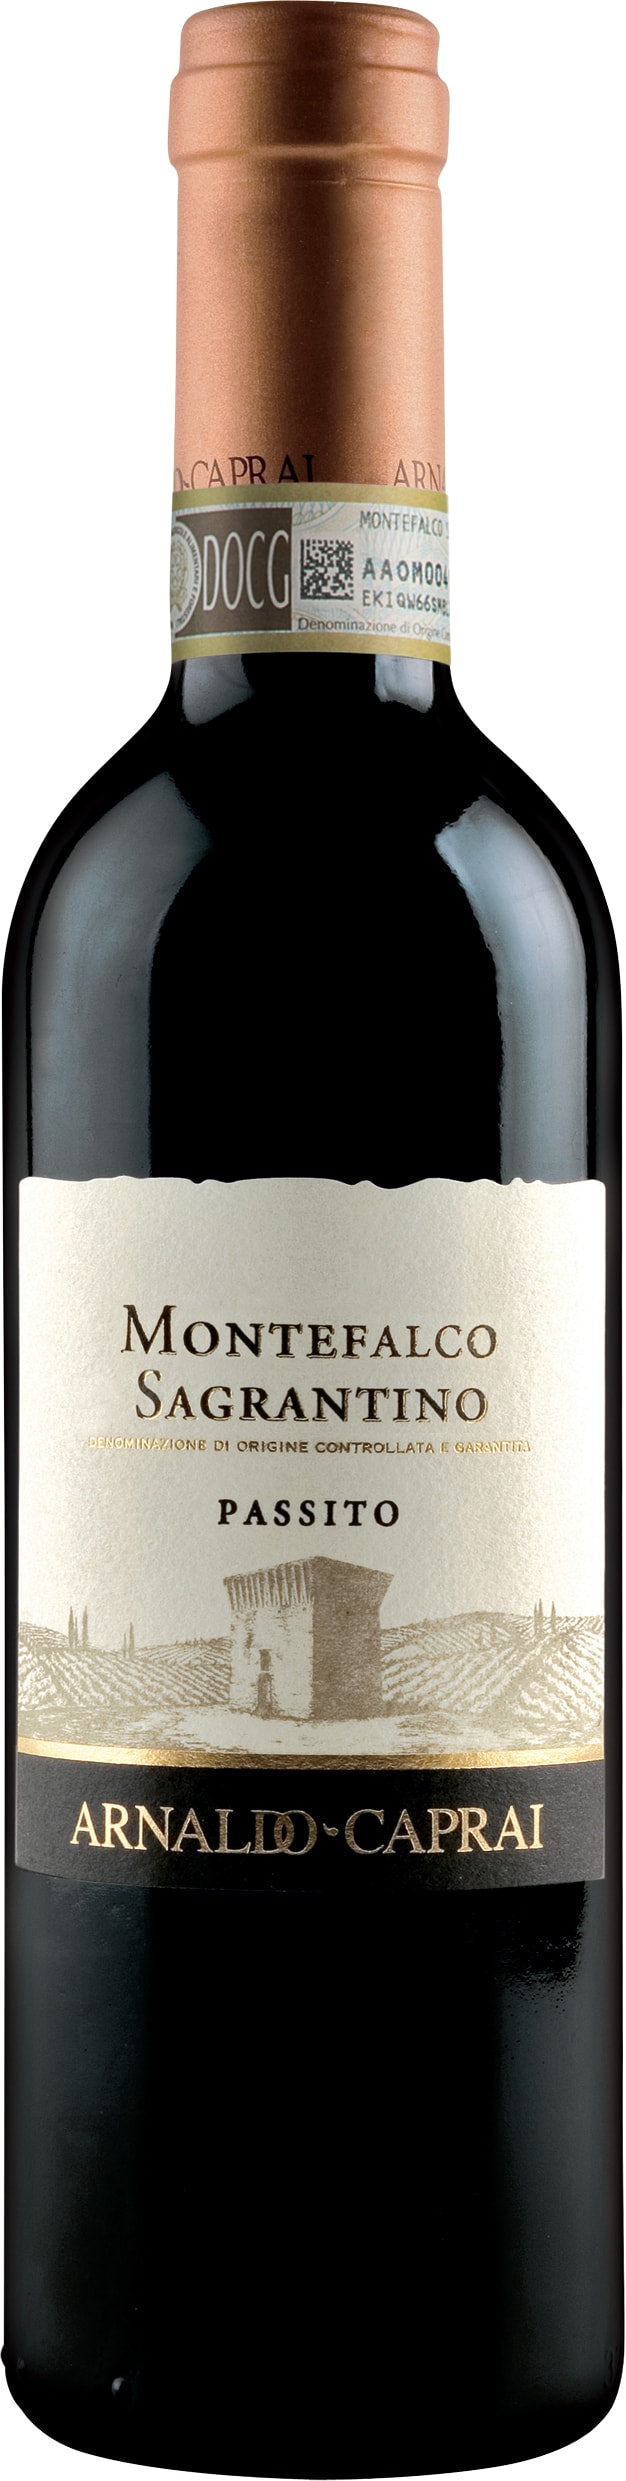 Arnaldo Caprai Sagrantino Passito DOCG 2017 37.5cl - Buy Arnaldo Caprai Wines from GREAT WINES DIRECT wine shop